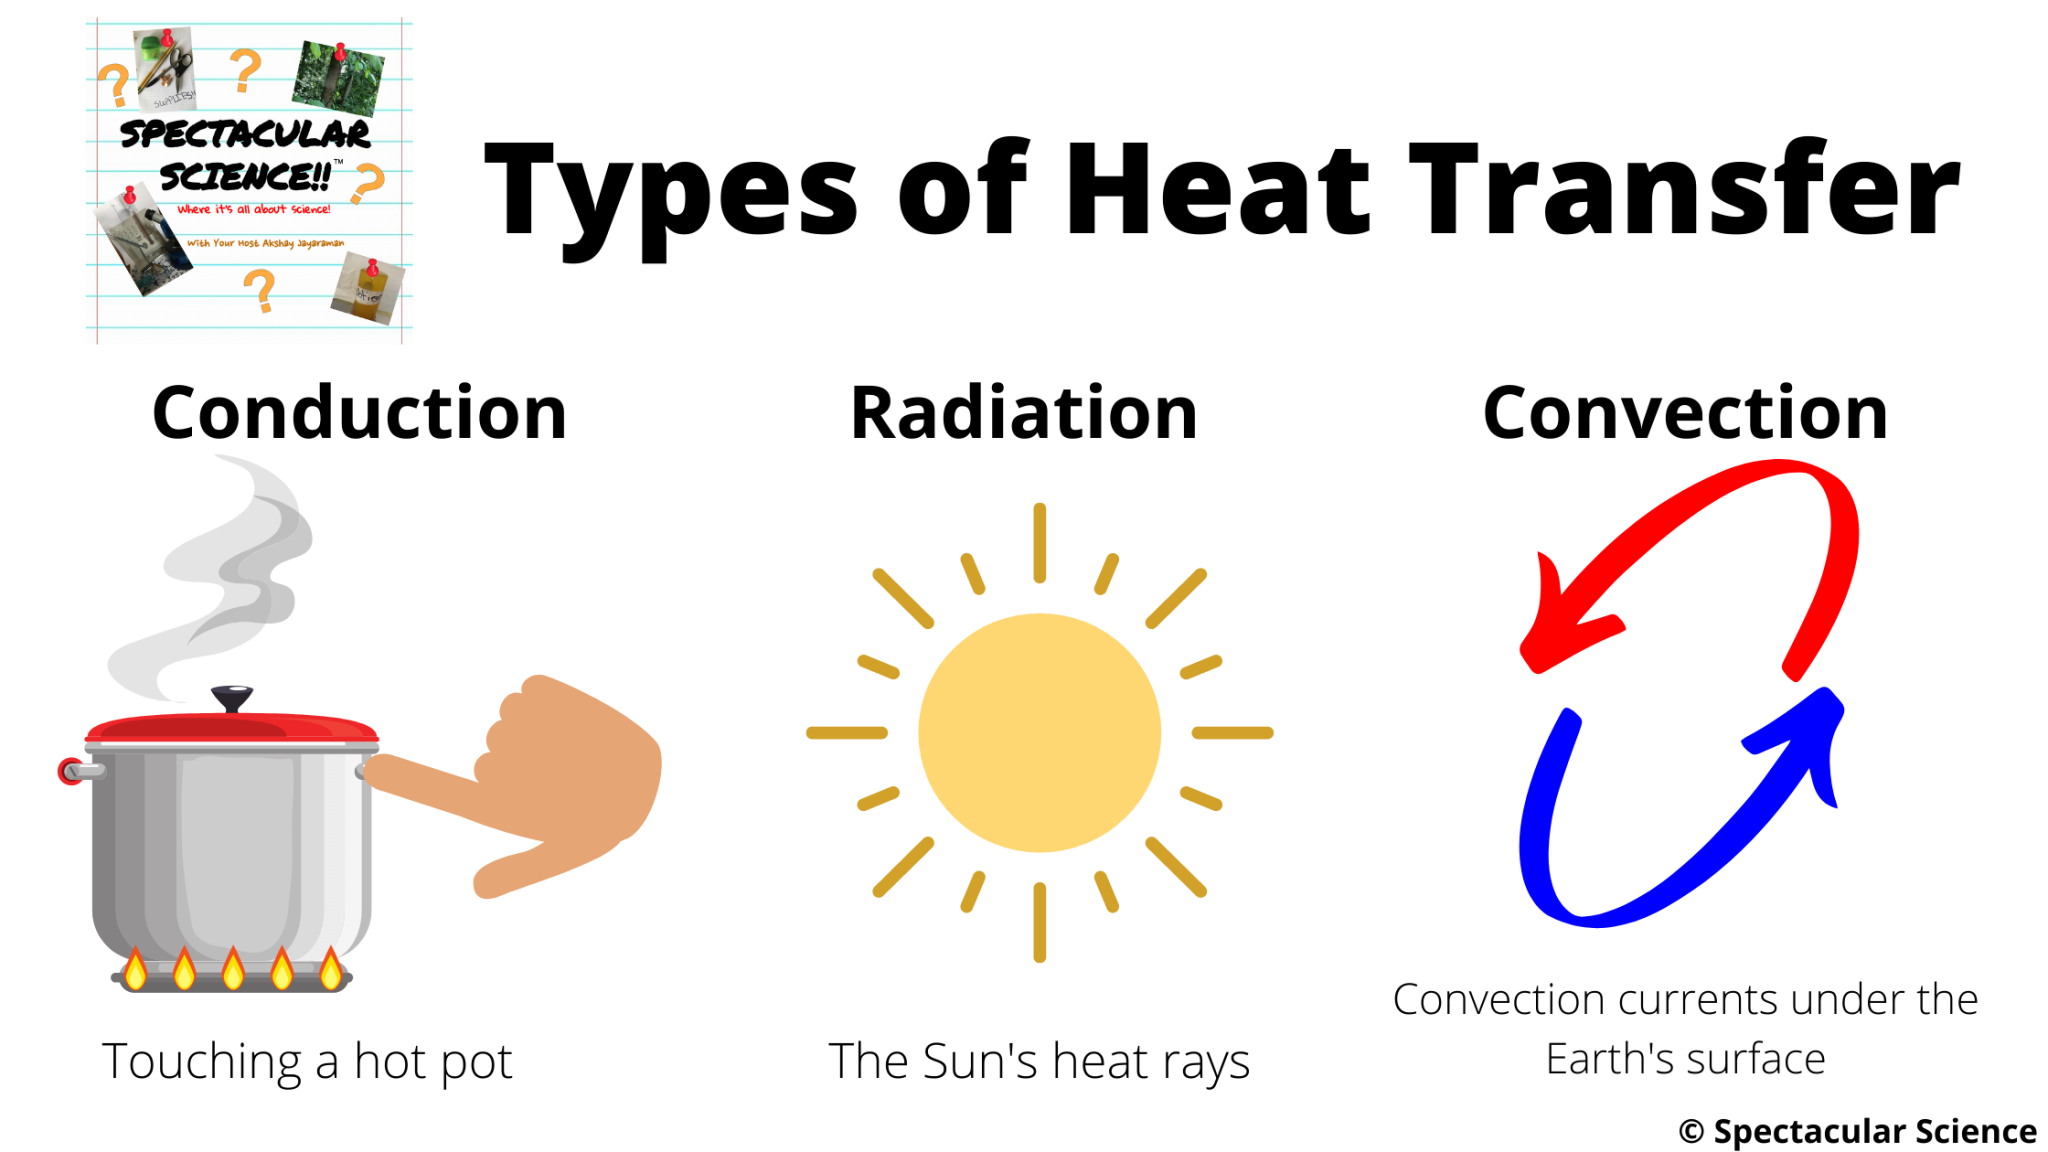 3 ways heat can travel